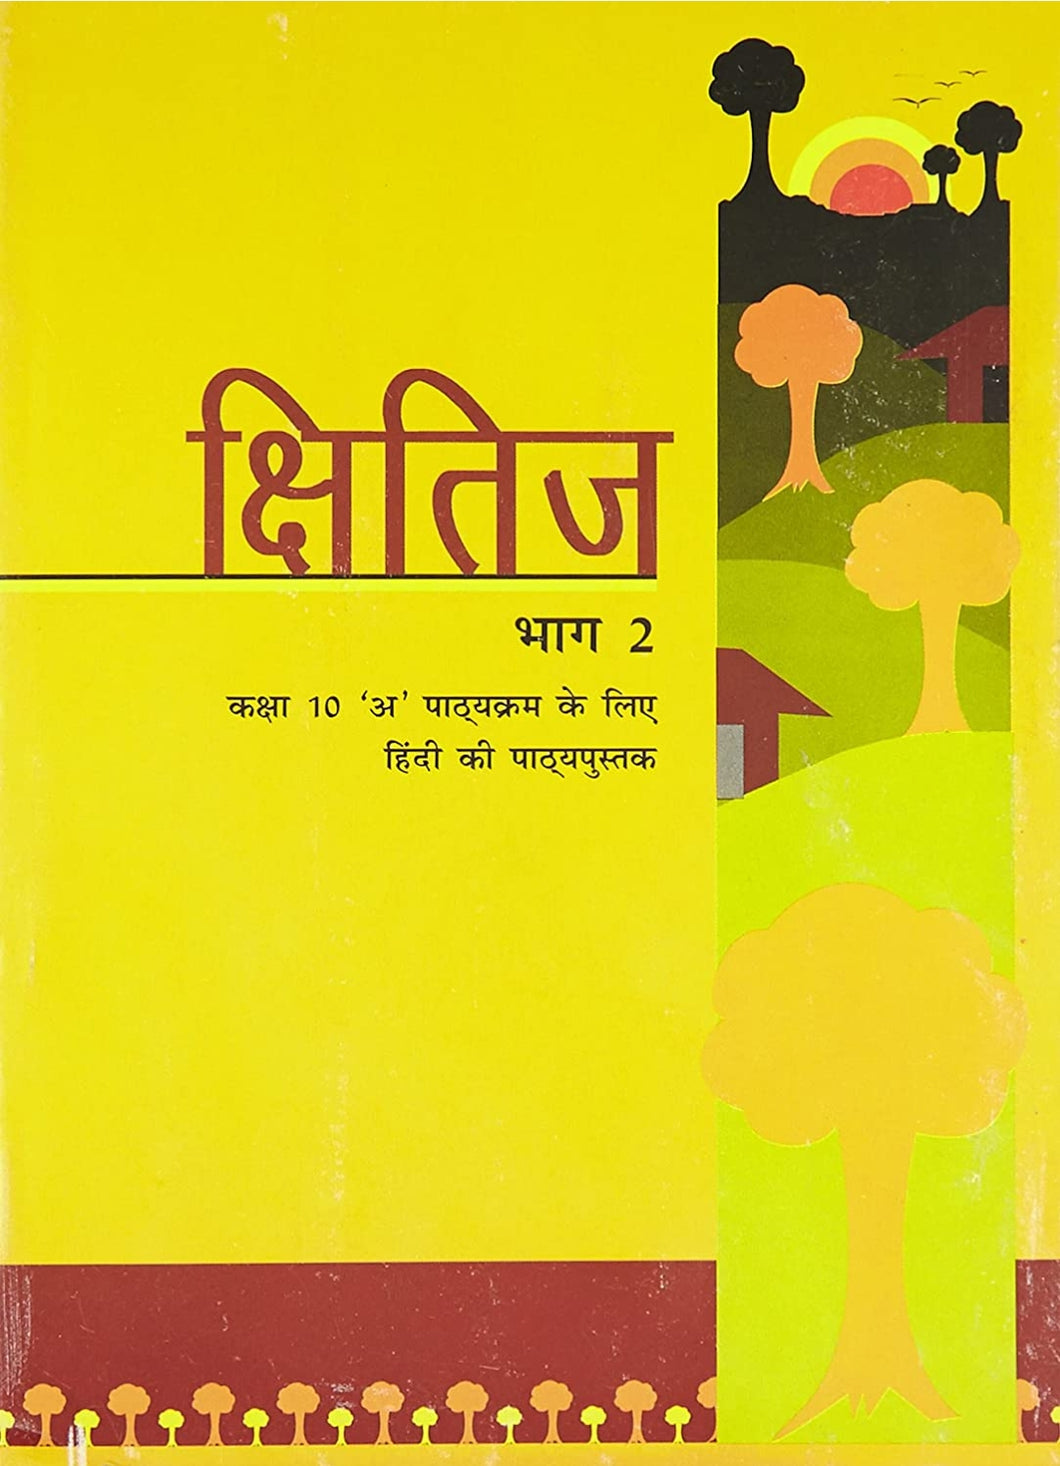 NCERT Kshitij - Hindi for Class 10 - latest edition as per NCERT/CBSE - Booksfy